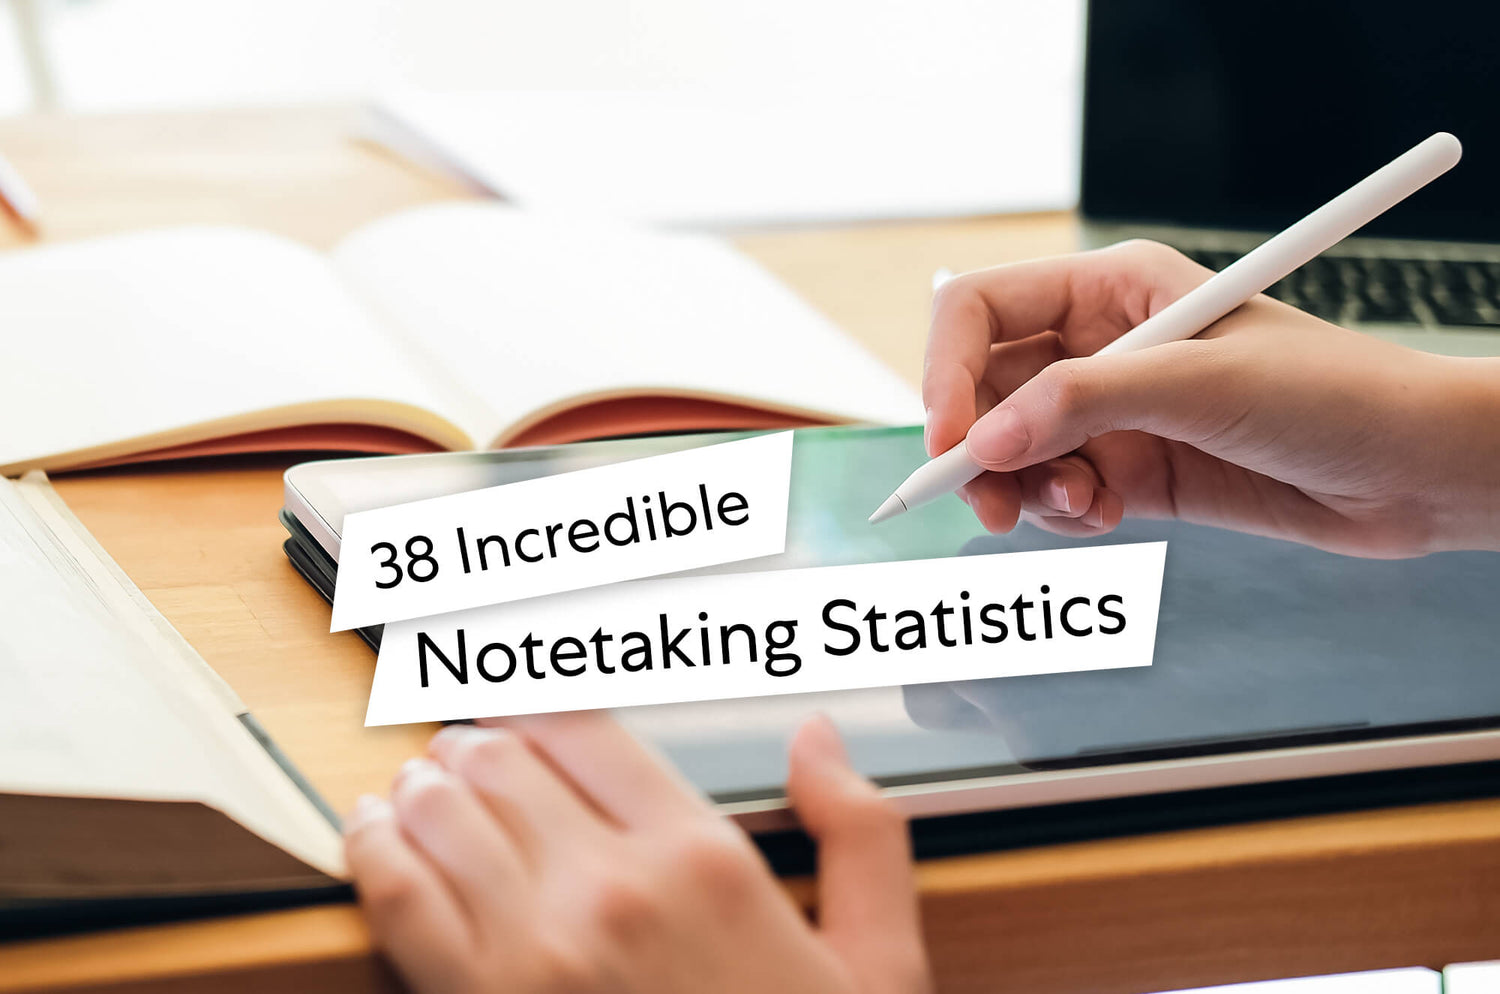 38 Incredible Notetaking Statistics